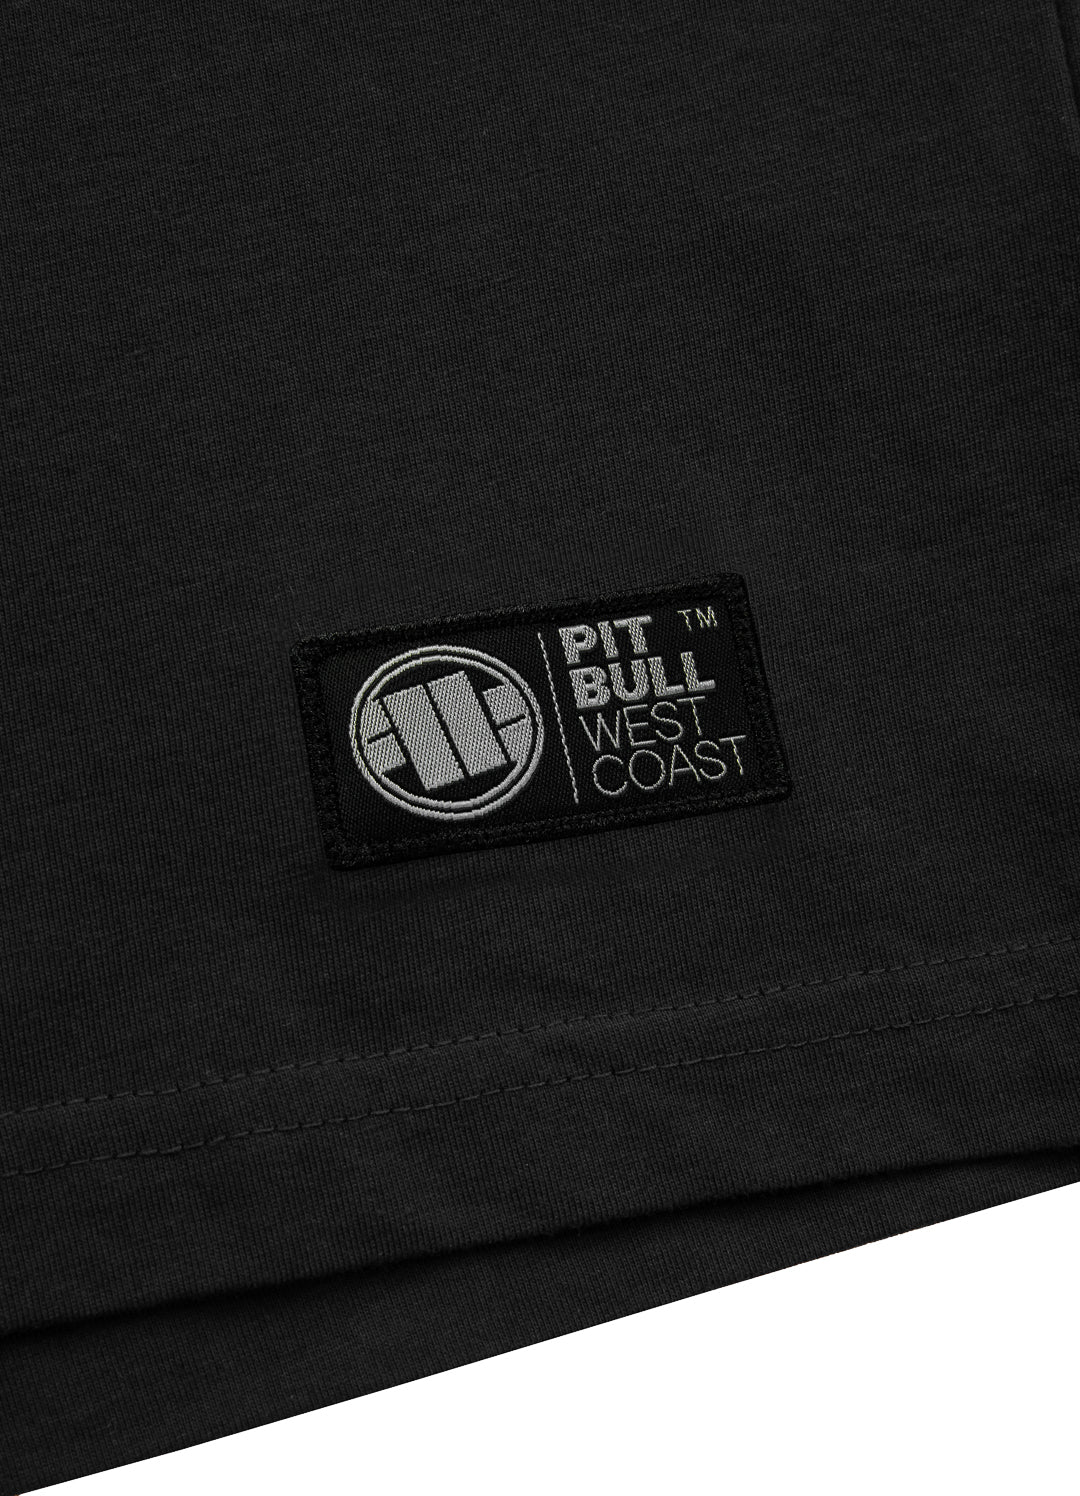 HILLTOP Slim Fit T-shirt Black.